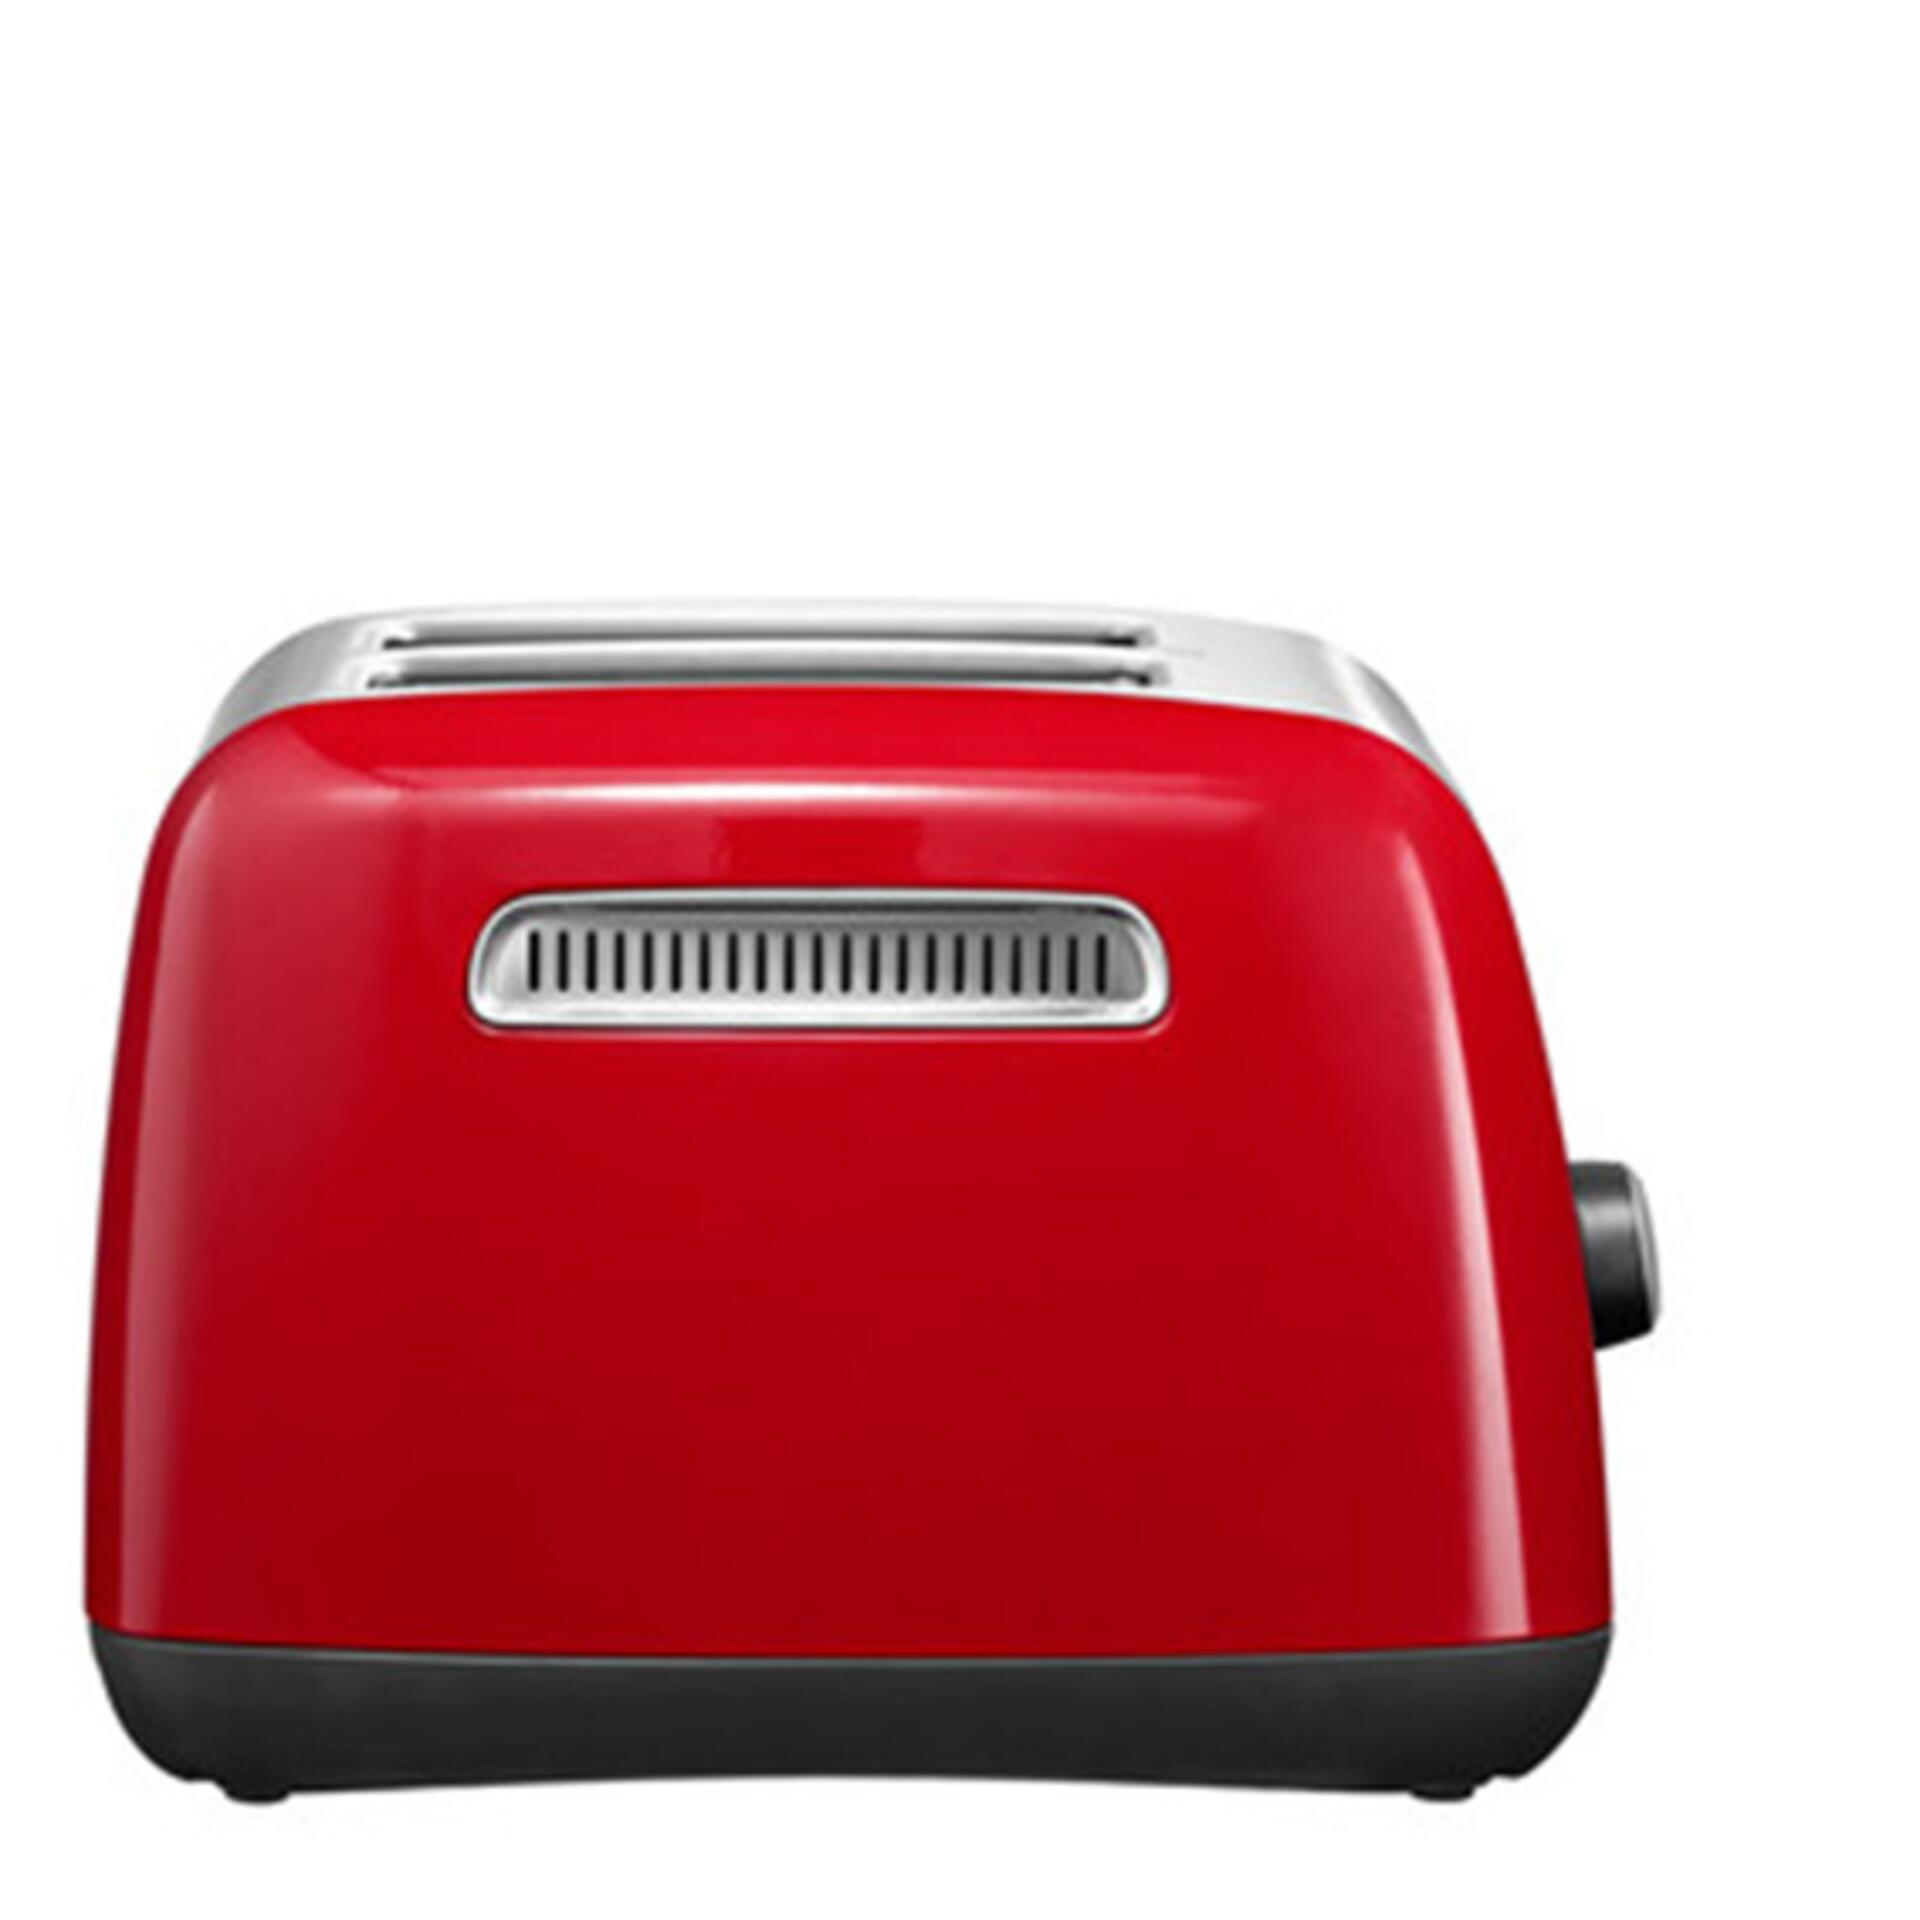 KitchenAid Toaster Creme 5KMT221EAC